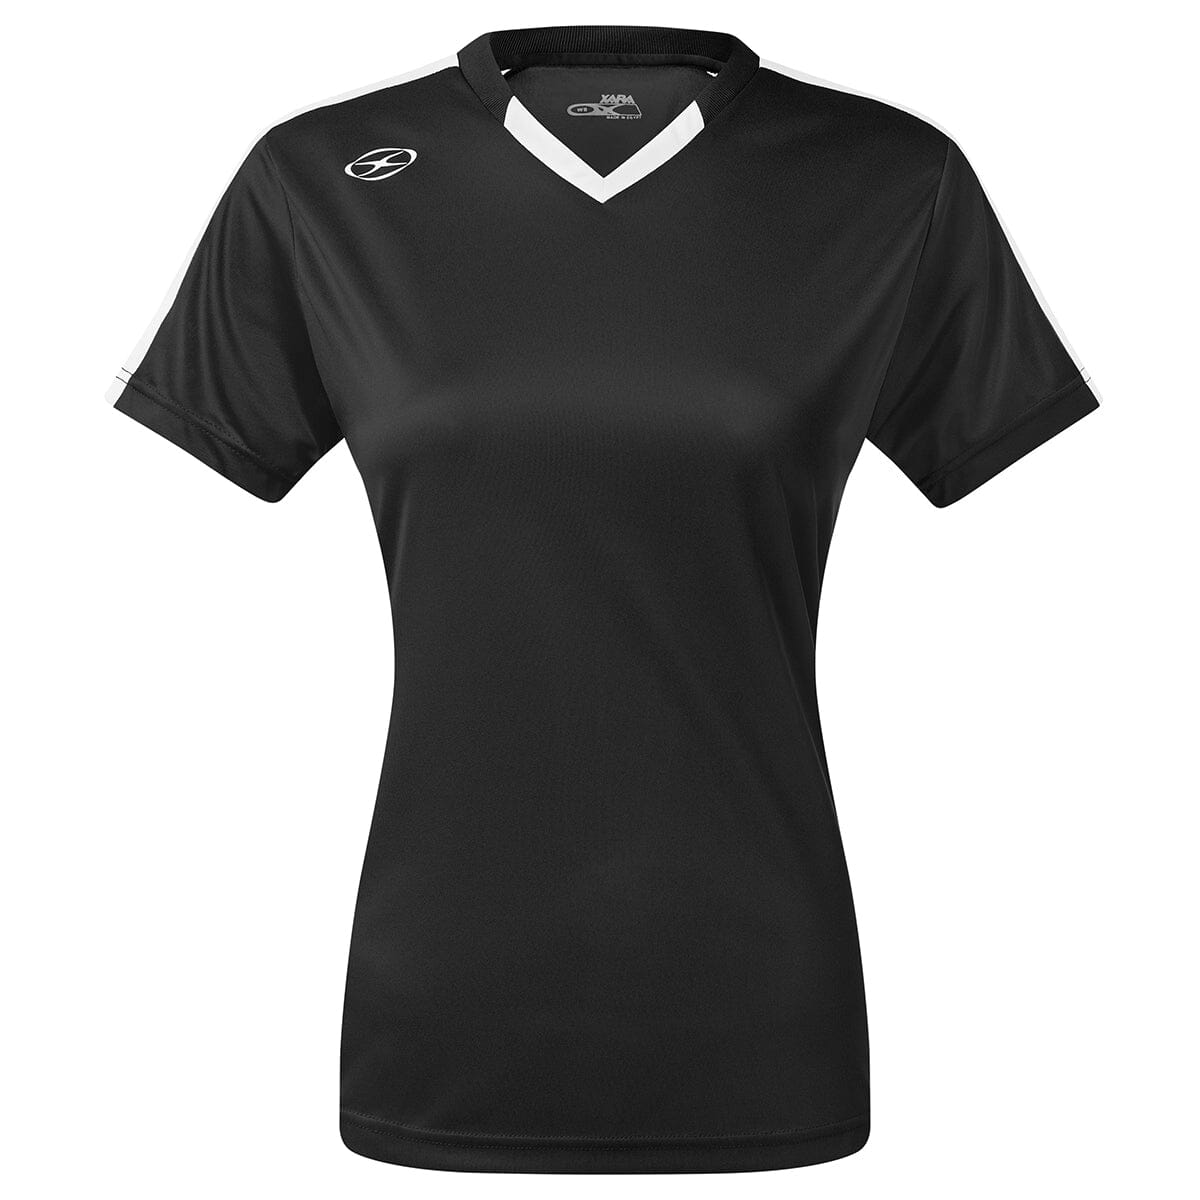 Britannia Jersey - Home Colors - Female Shirt Xara Soccer Black/White Womens Large 